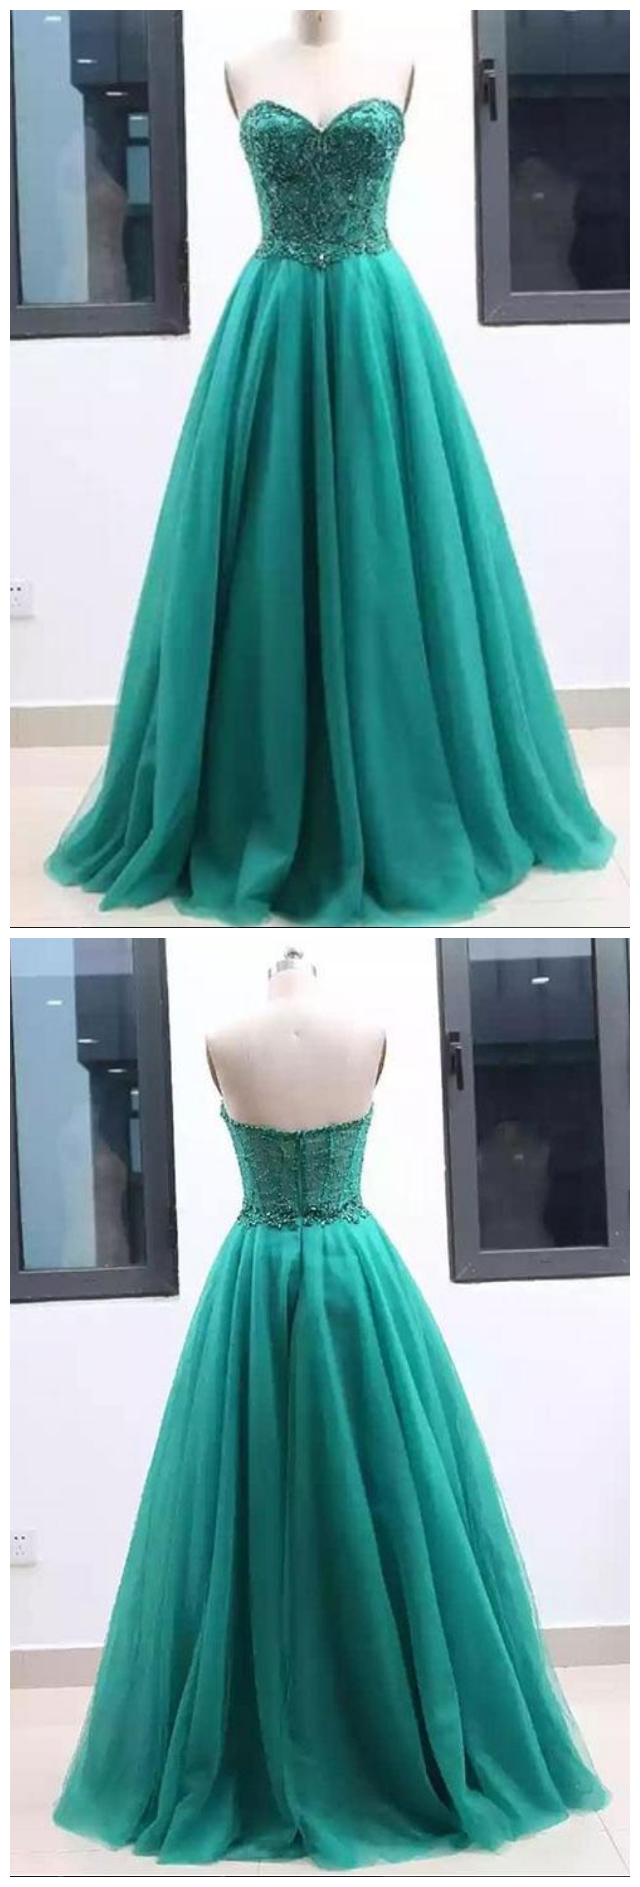 Sweetheart Green Tulle Long A Line Prom Dress, Green Evening Dress